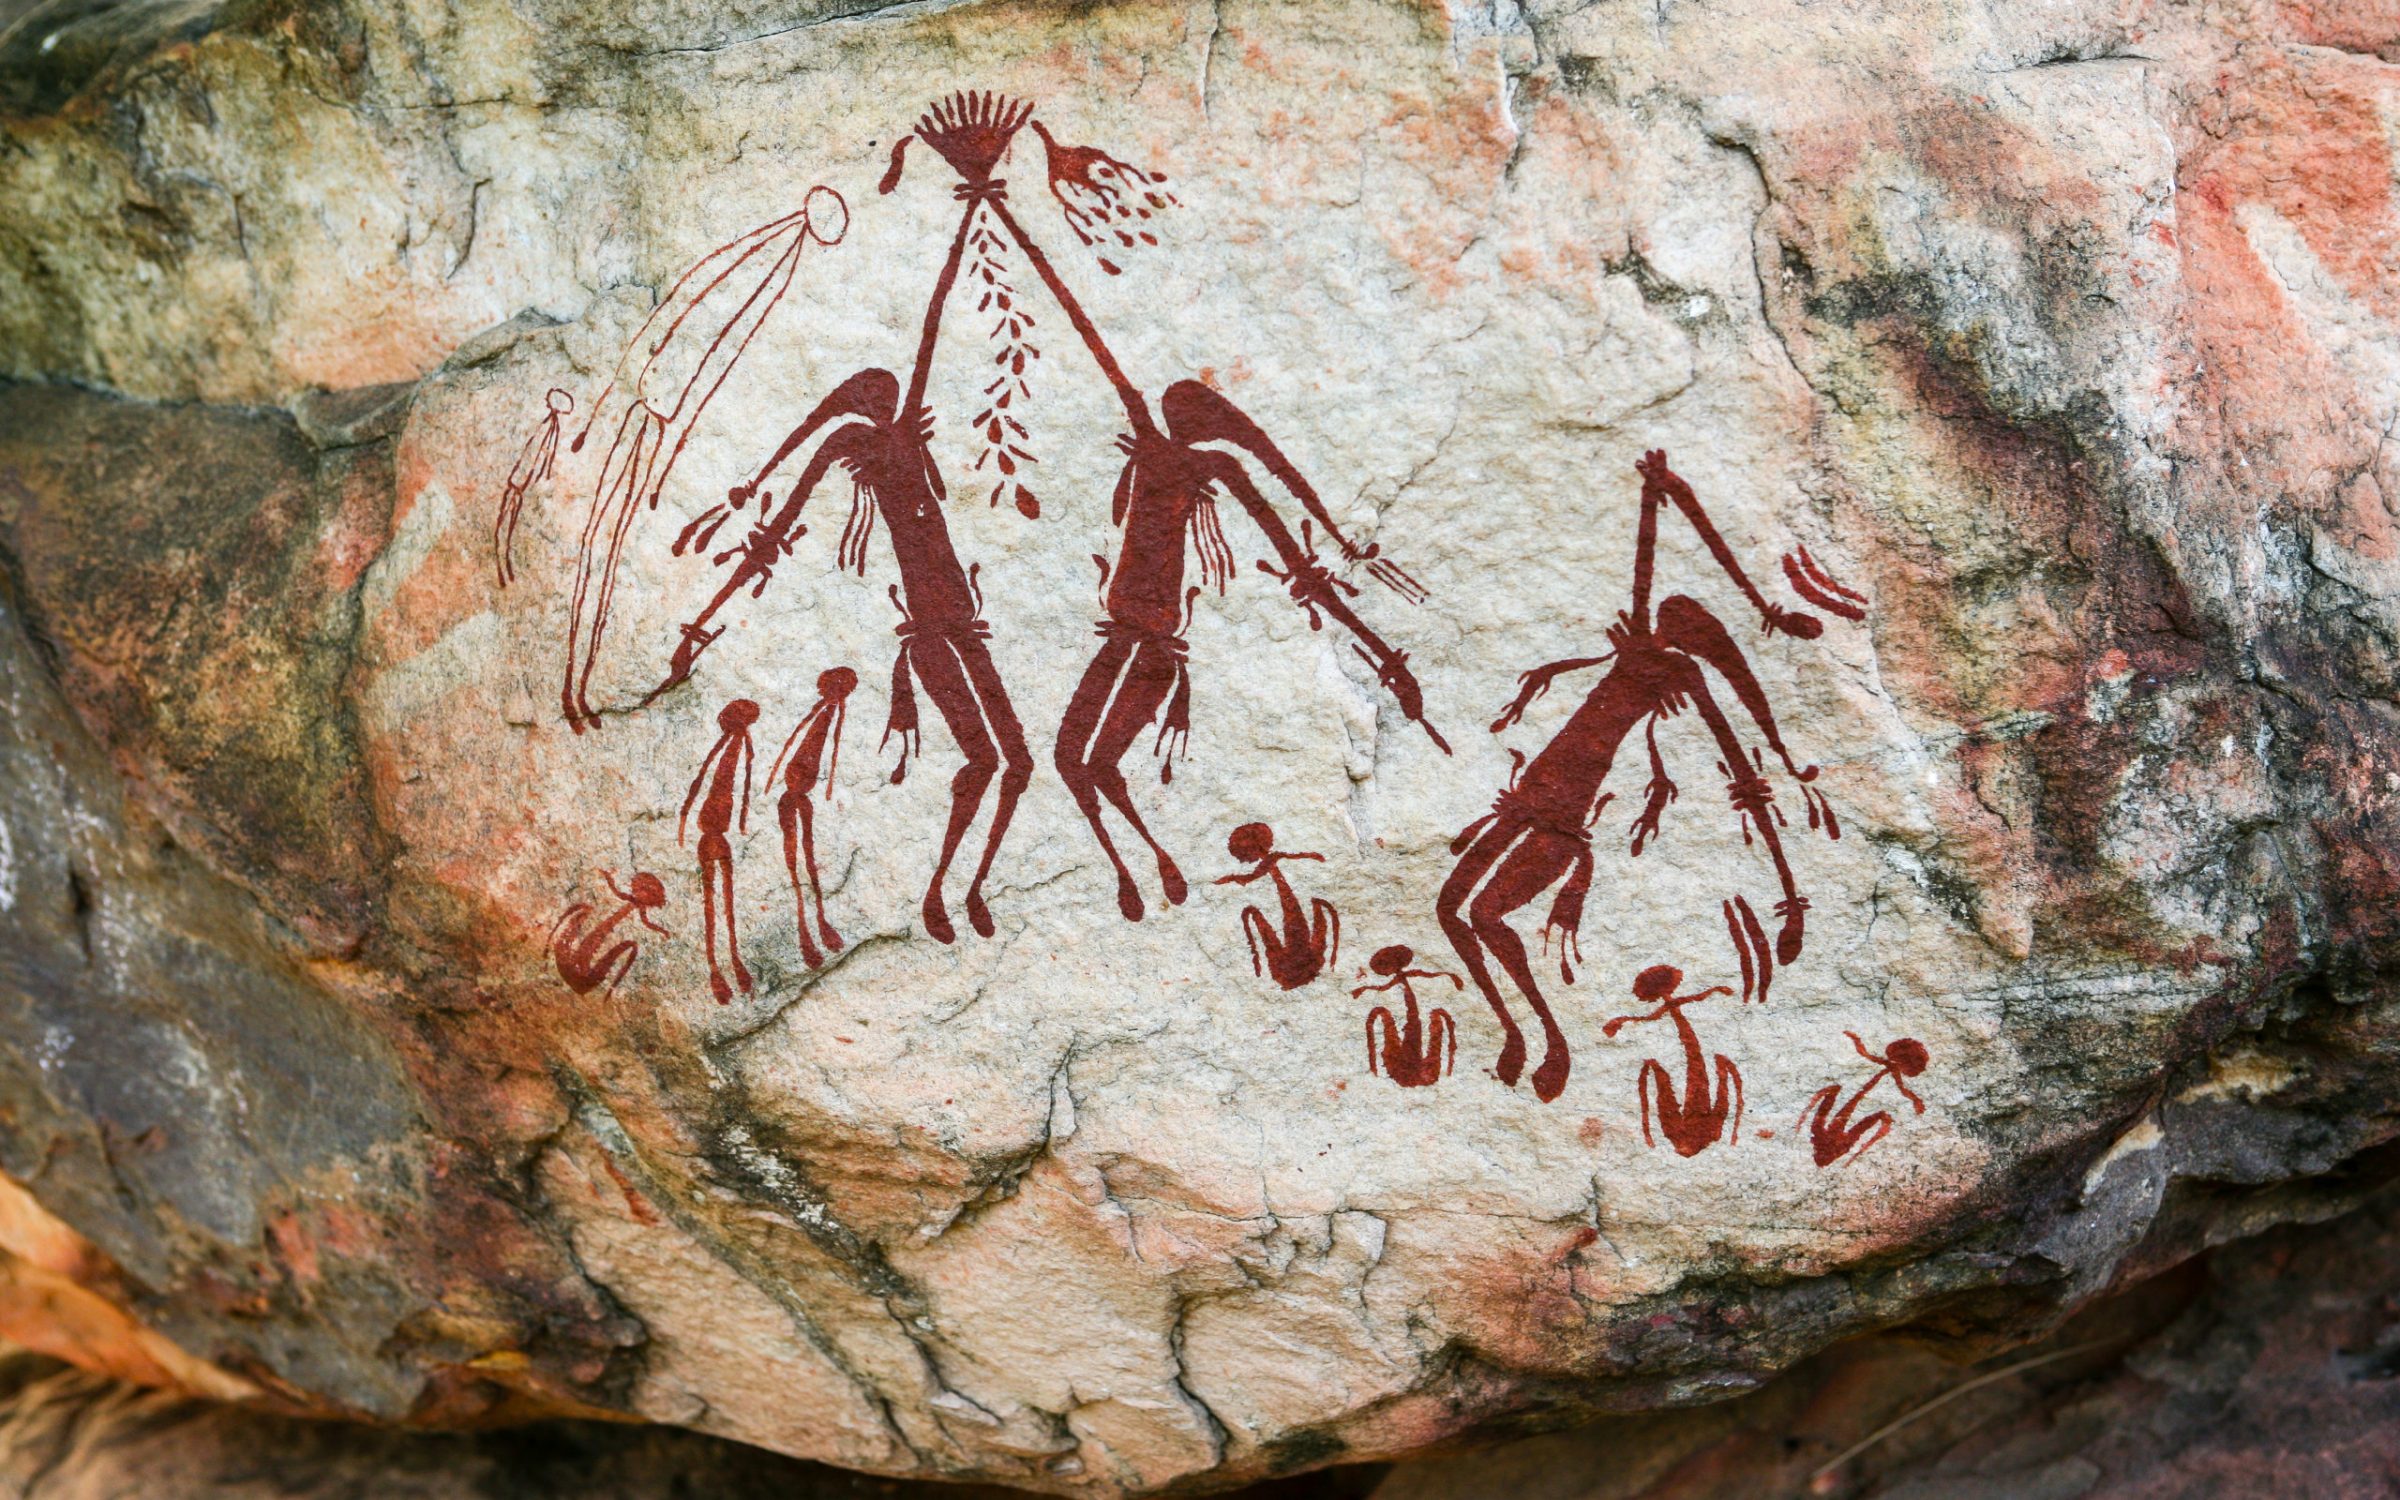 Indigenous aboriginal rock art in Australia's Kimberley region,  Kalumburu. Image: AdobeStock